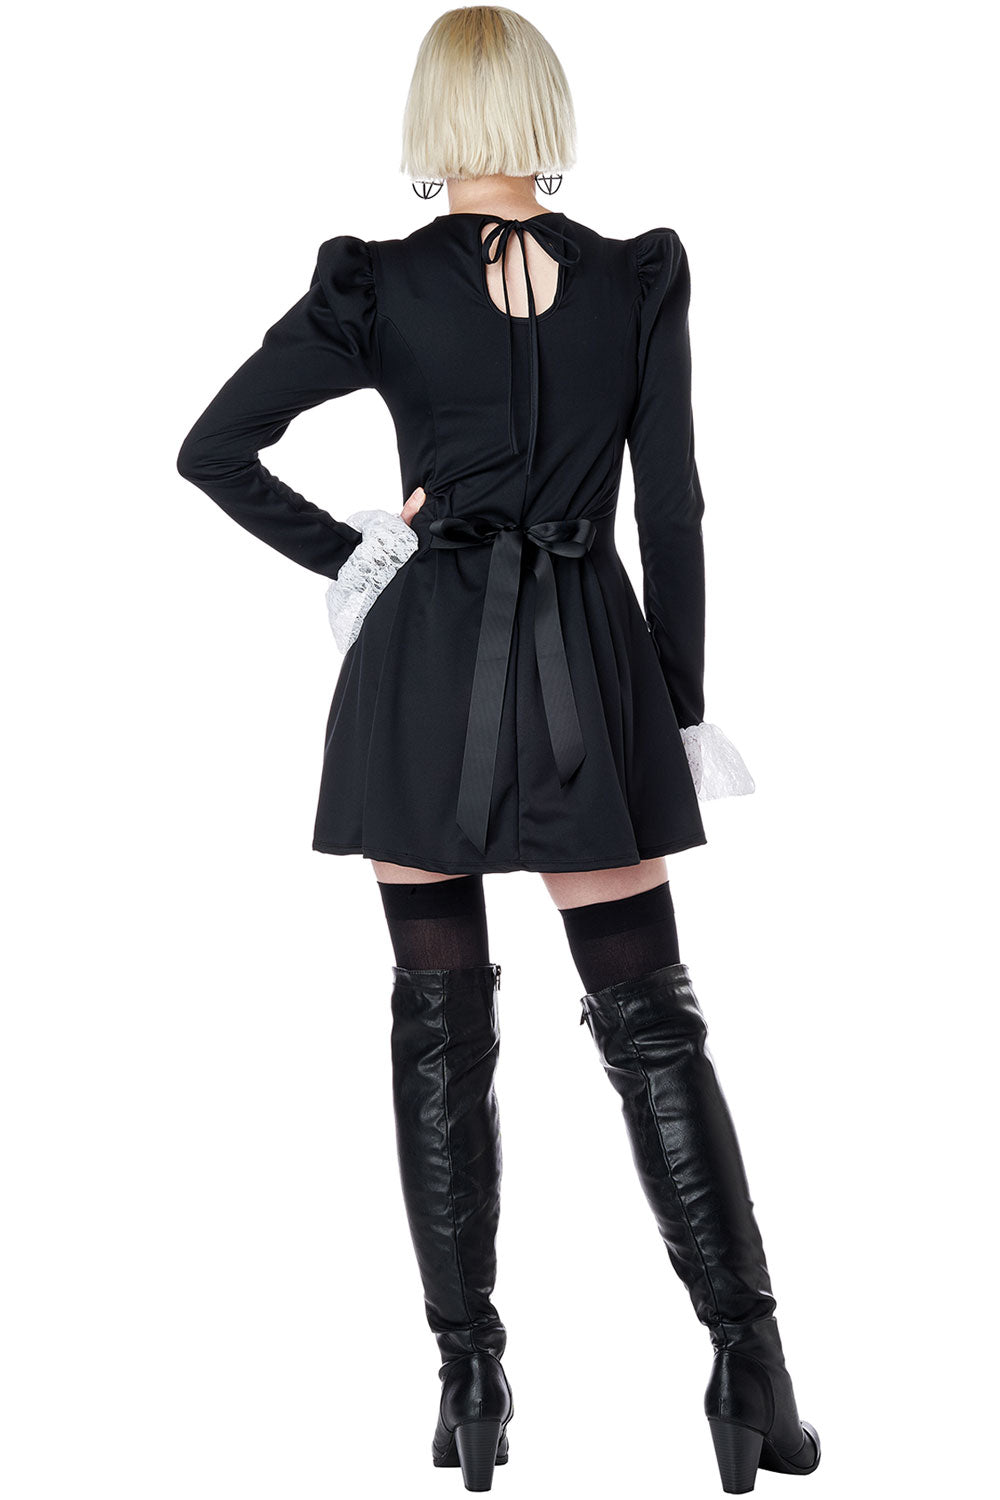 Gothic Mini Dress / Adult California Costume 5021-170